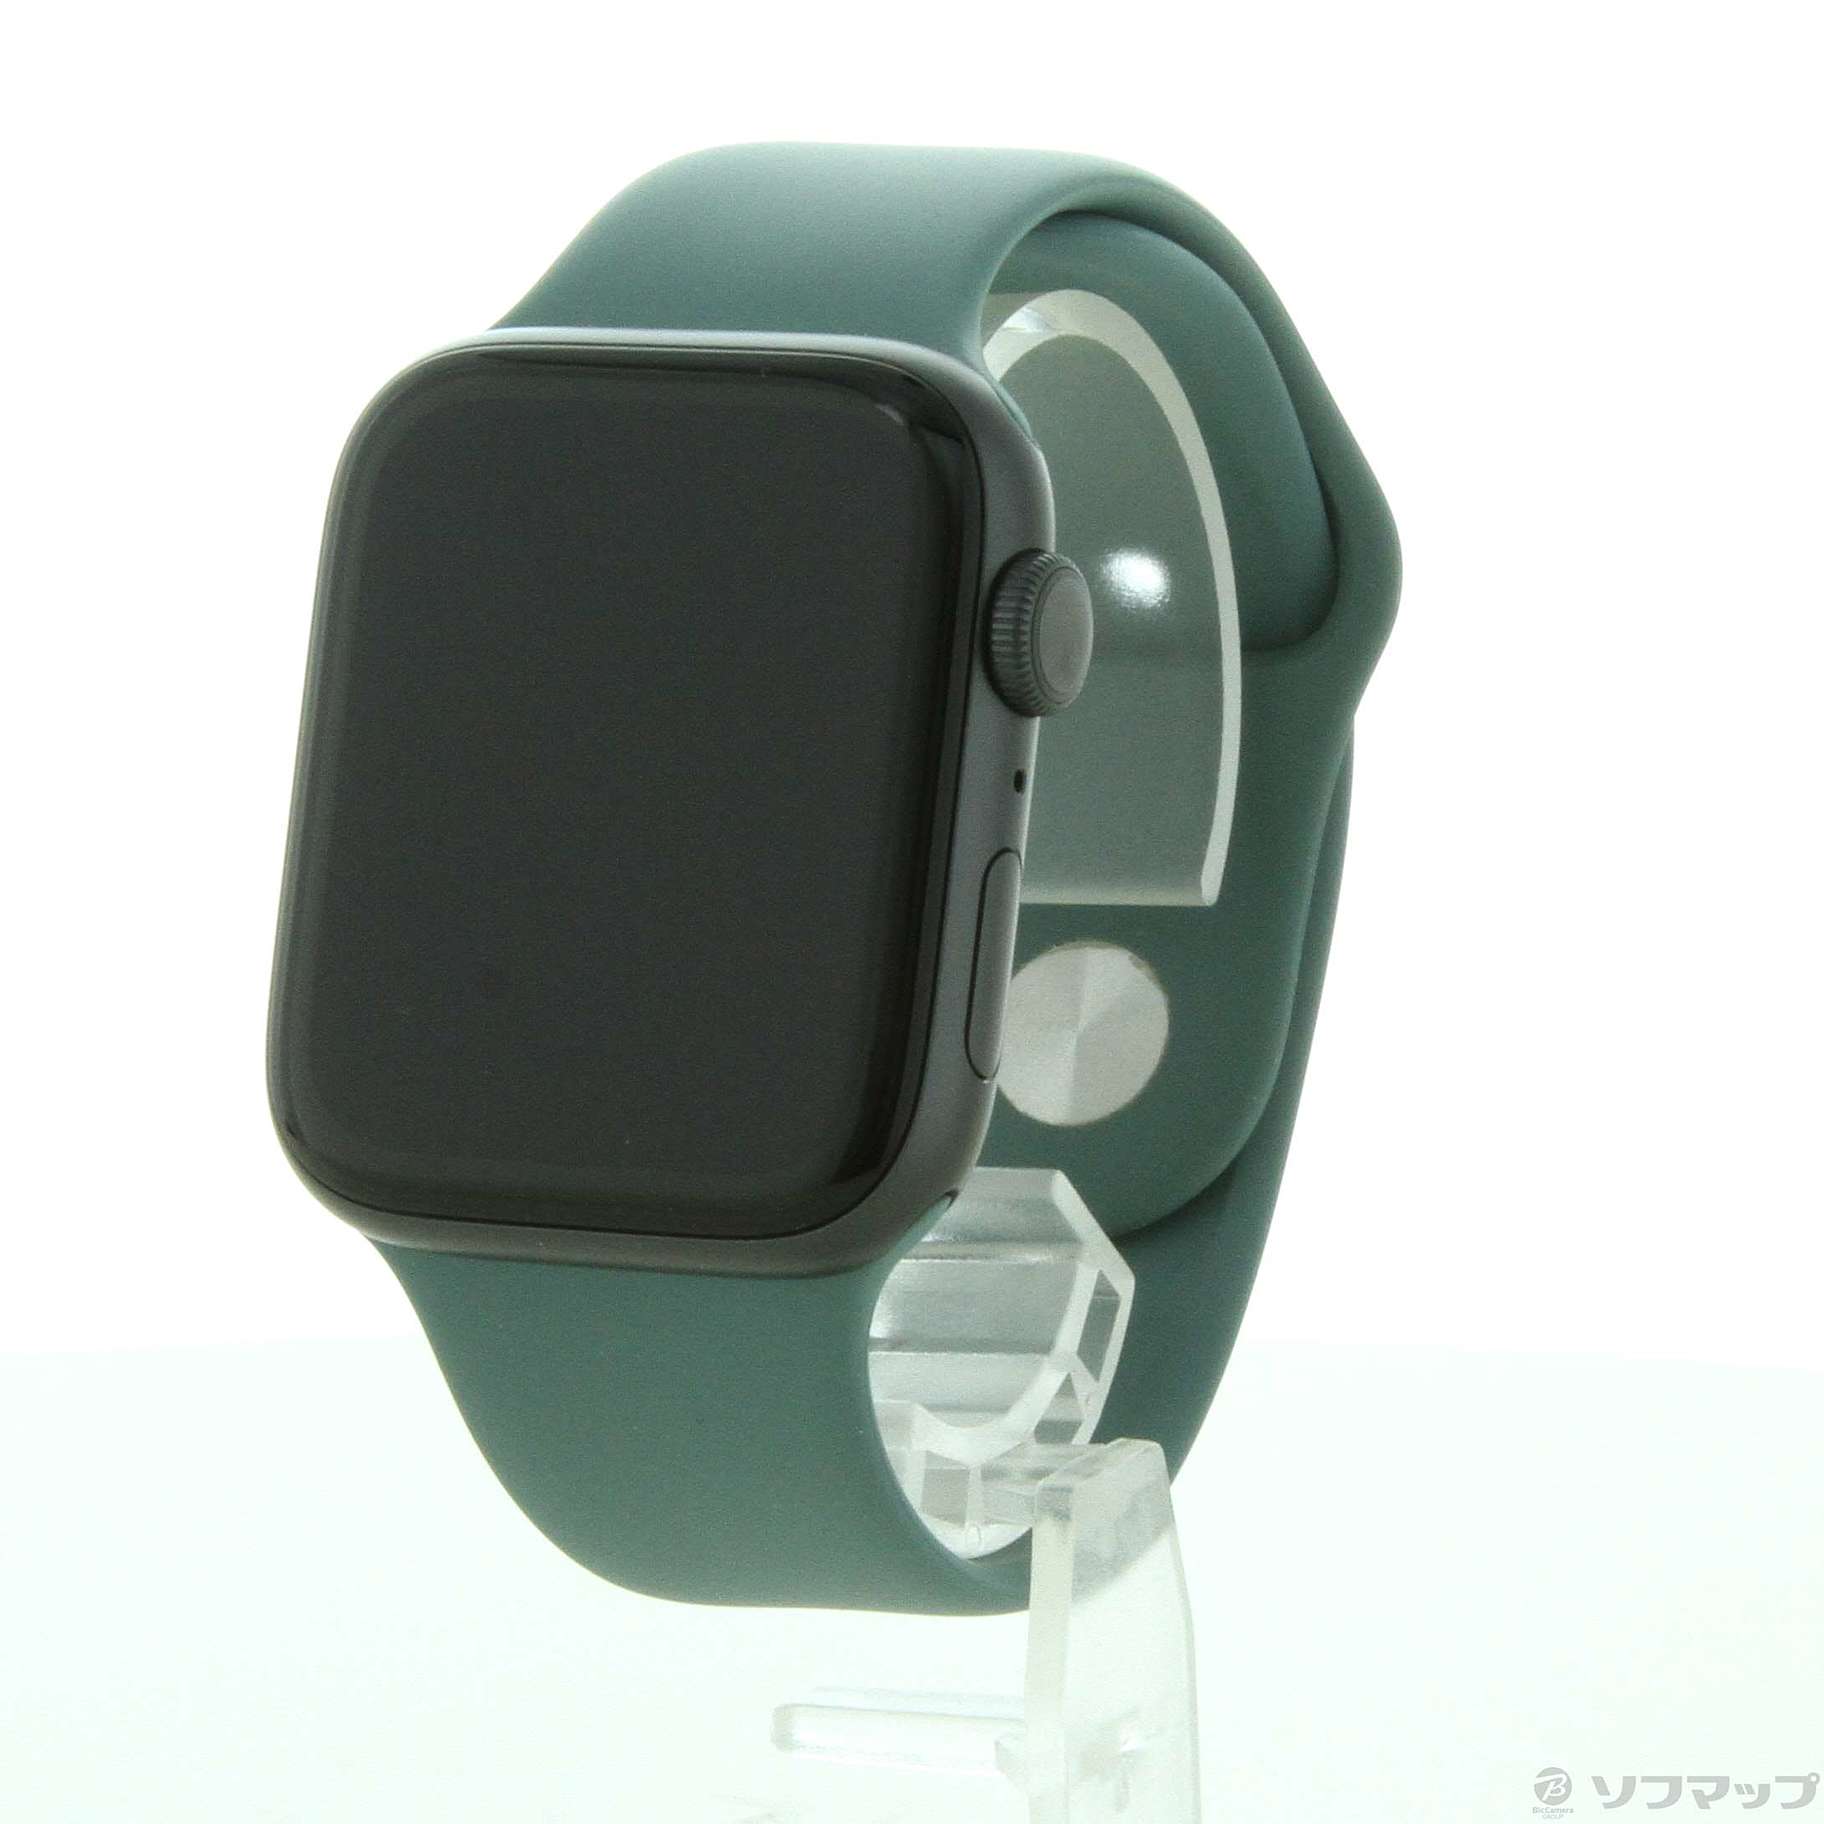 Apple Watch Series 5 GPS 44mm スペースグレイアルミニウムケース ブラックスポーツバンド